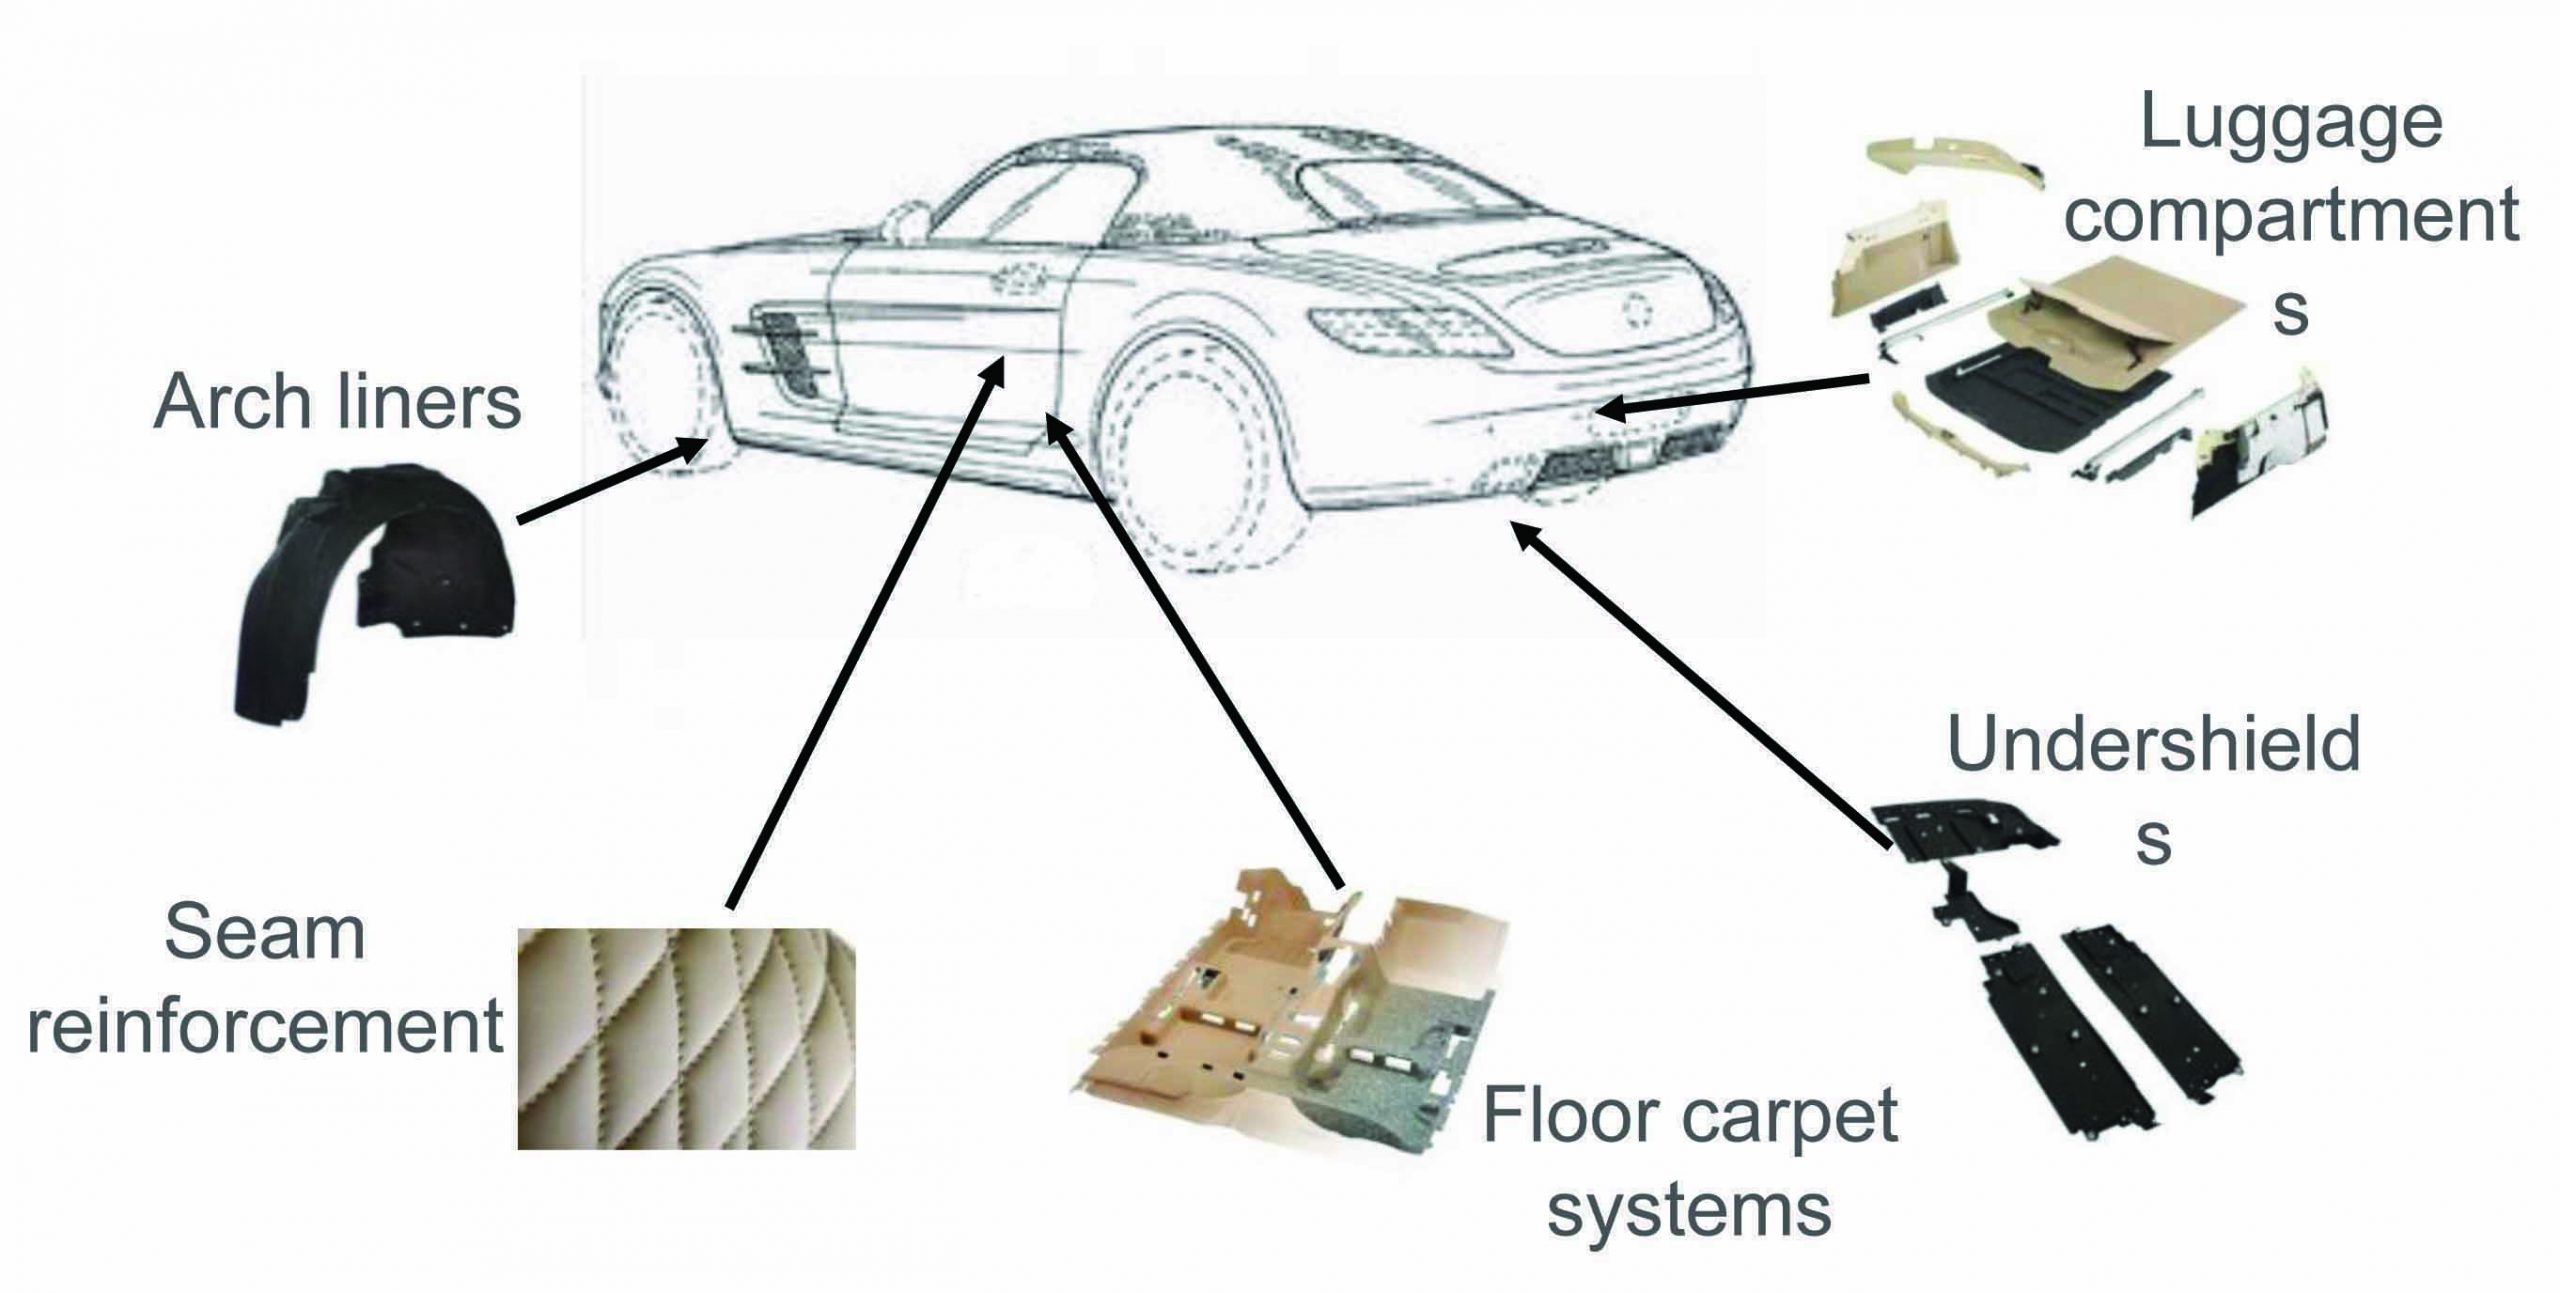 PP fiber applications in the automotive market.